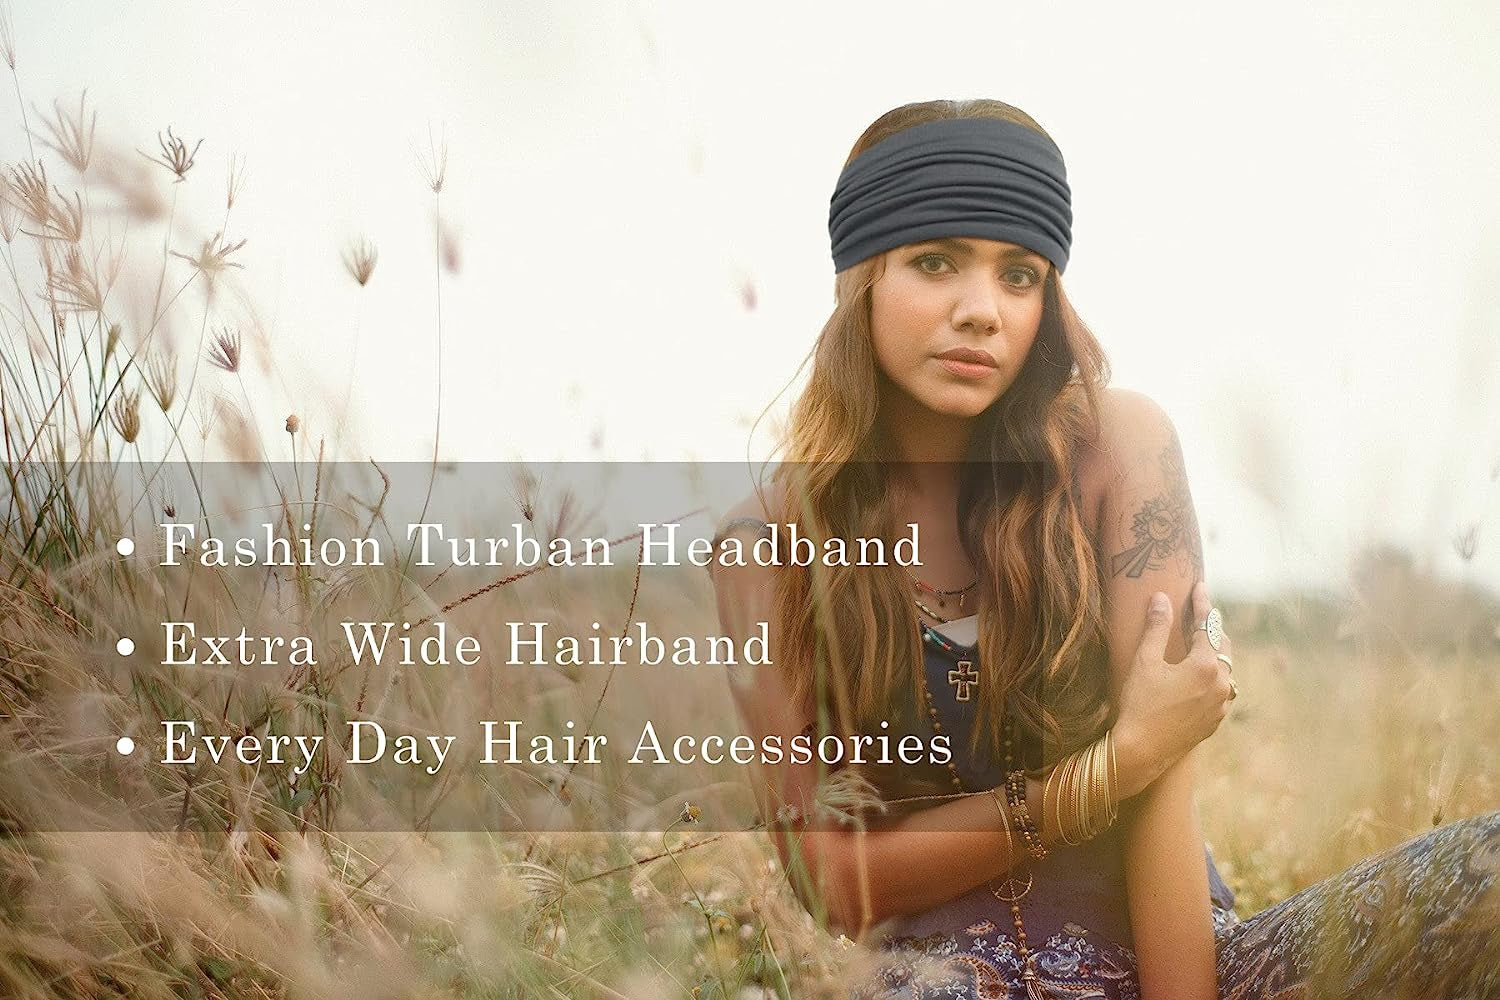 Boho Floral Headband Women Wrap Twist Knot Elastic Turban Hair Band  Hairband BN